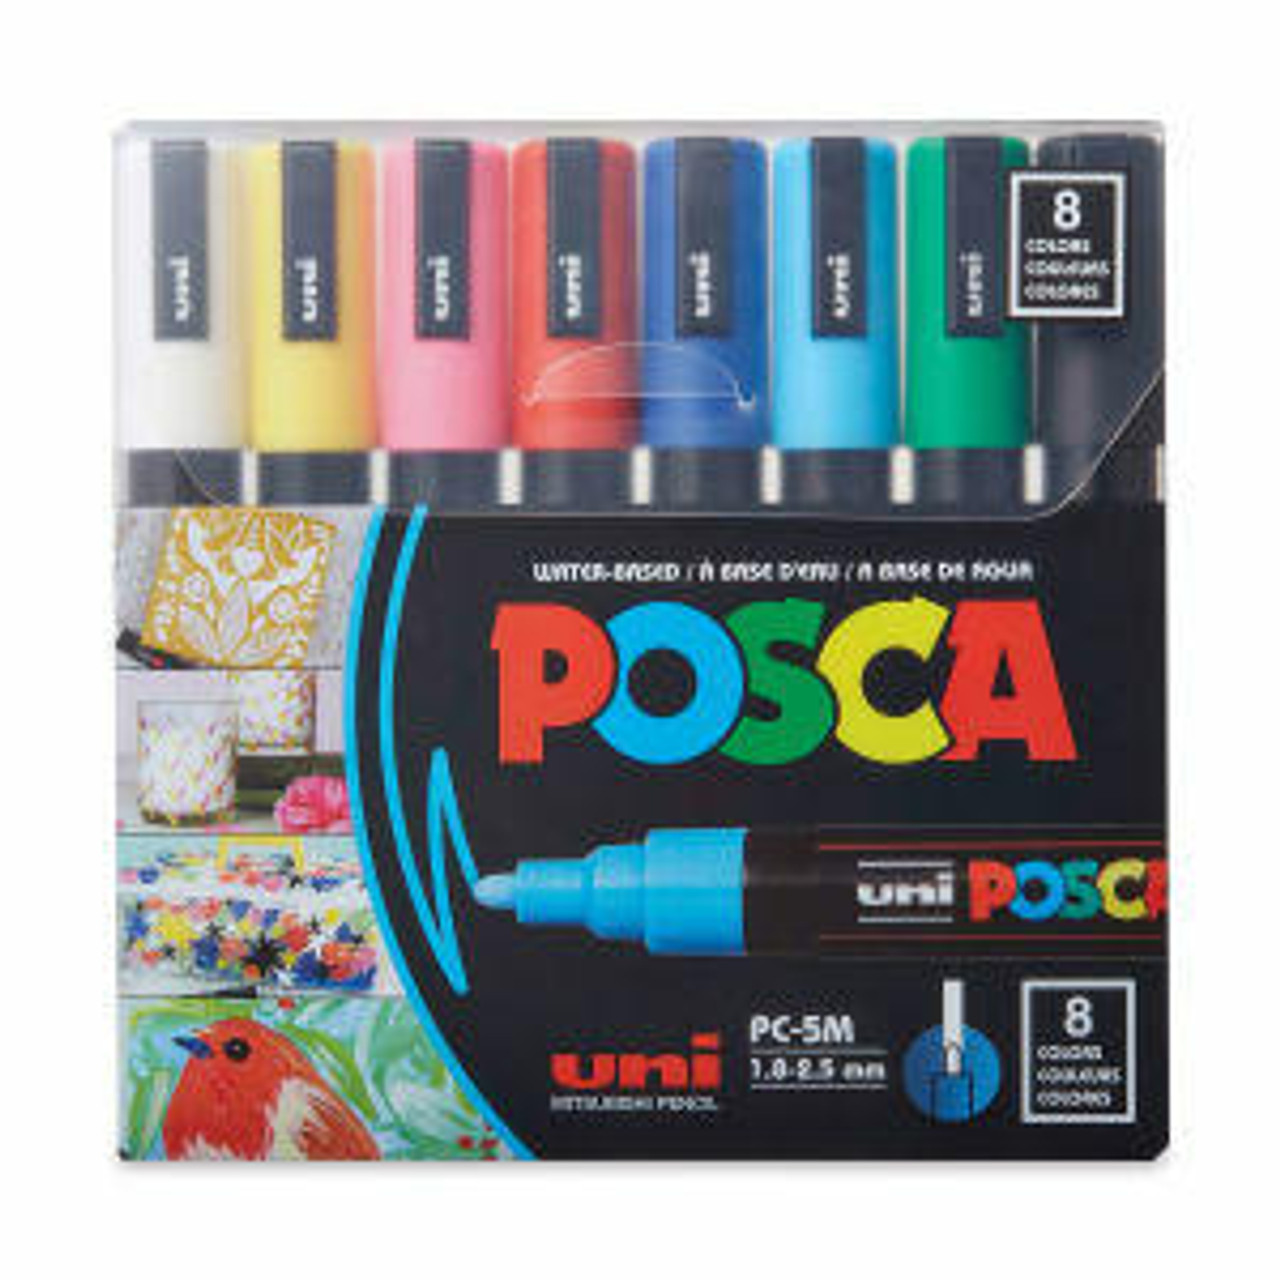 https://cdn11.bigcommerce.com/s-9uf88xhege/images/stencil/1280x1280/products/10532/25088/posca-posca-8-color-paint-marker-set-pc-5m-medium__59845.1695317518.jpg?c=1